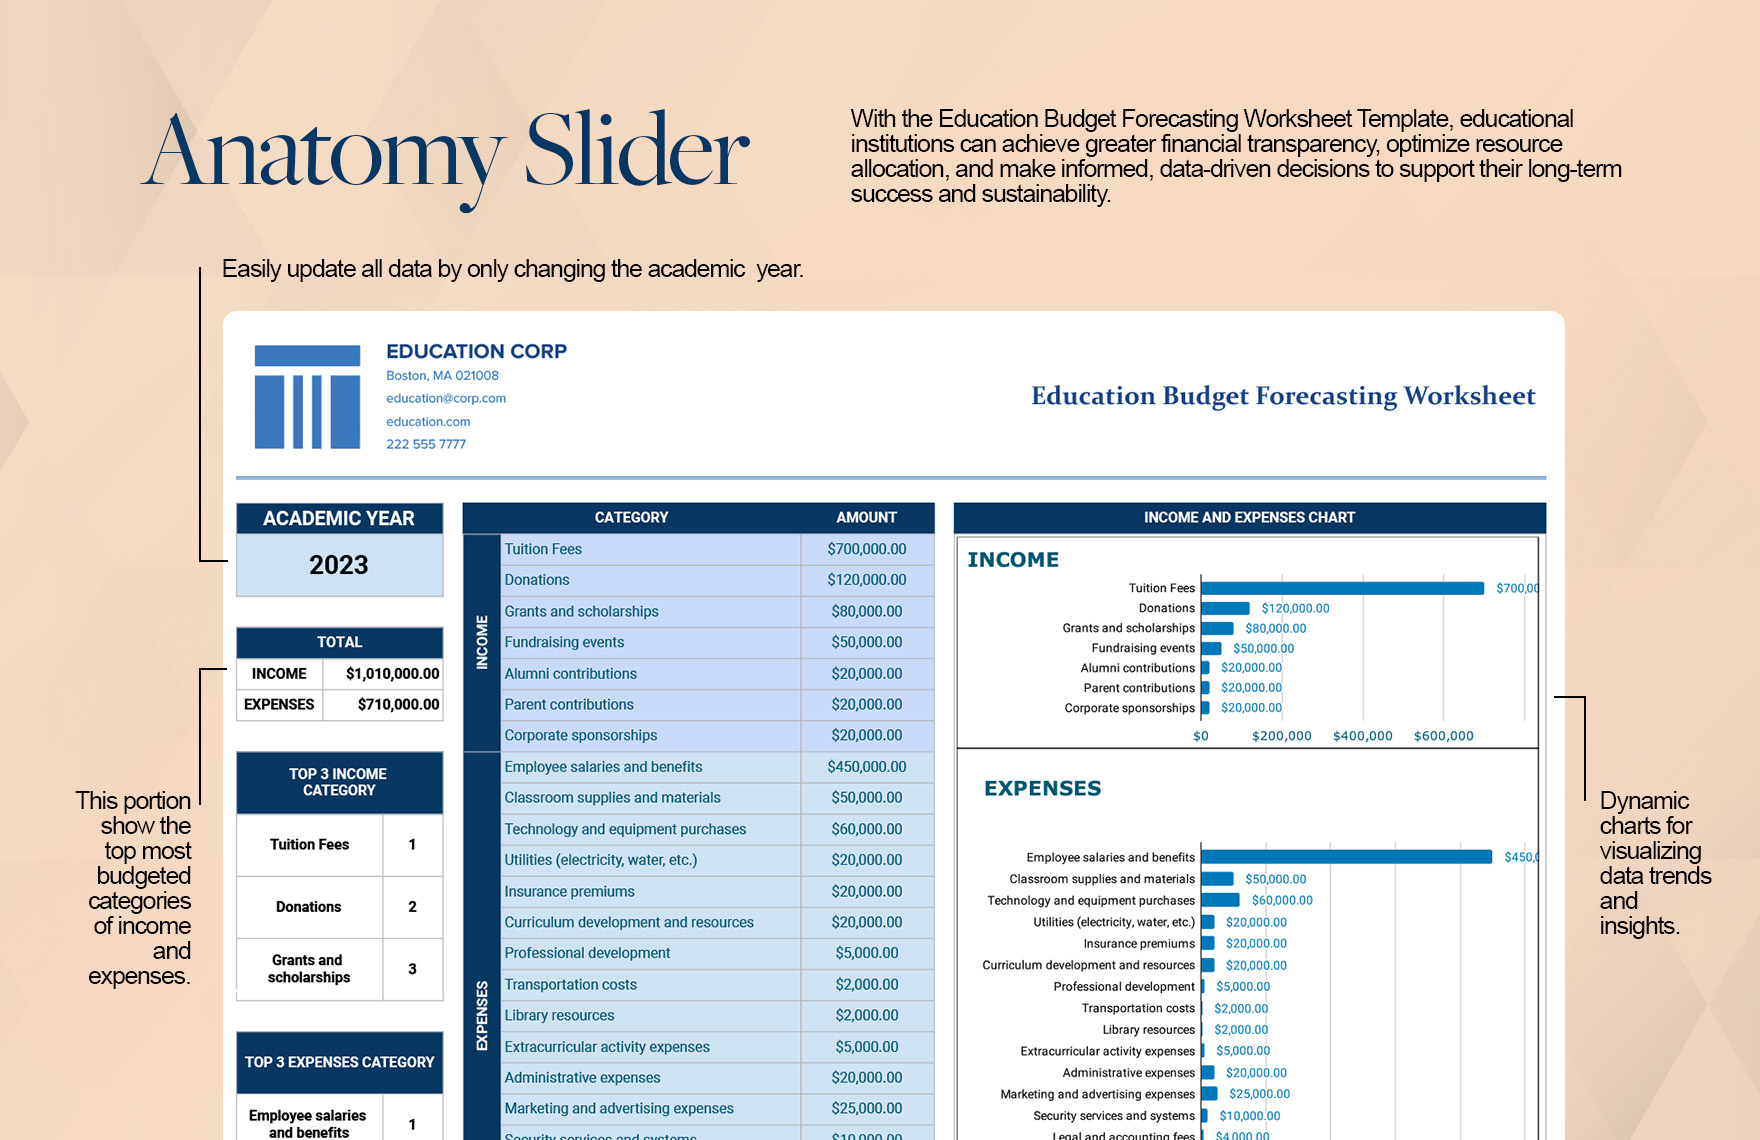 Education Budget Forecasting Worksheet Template